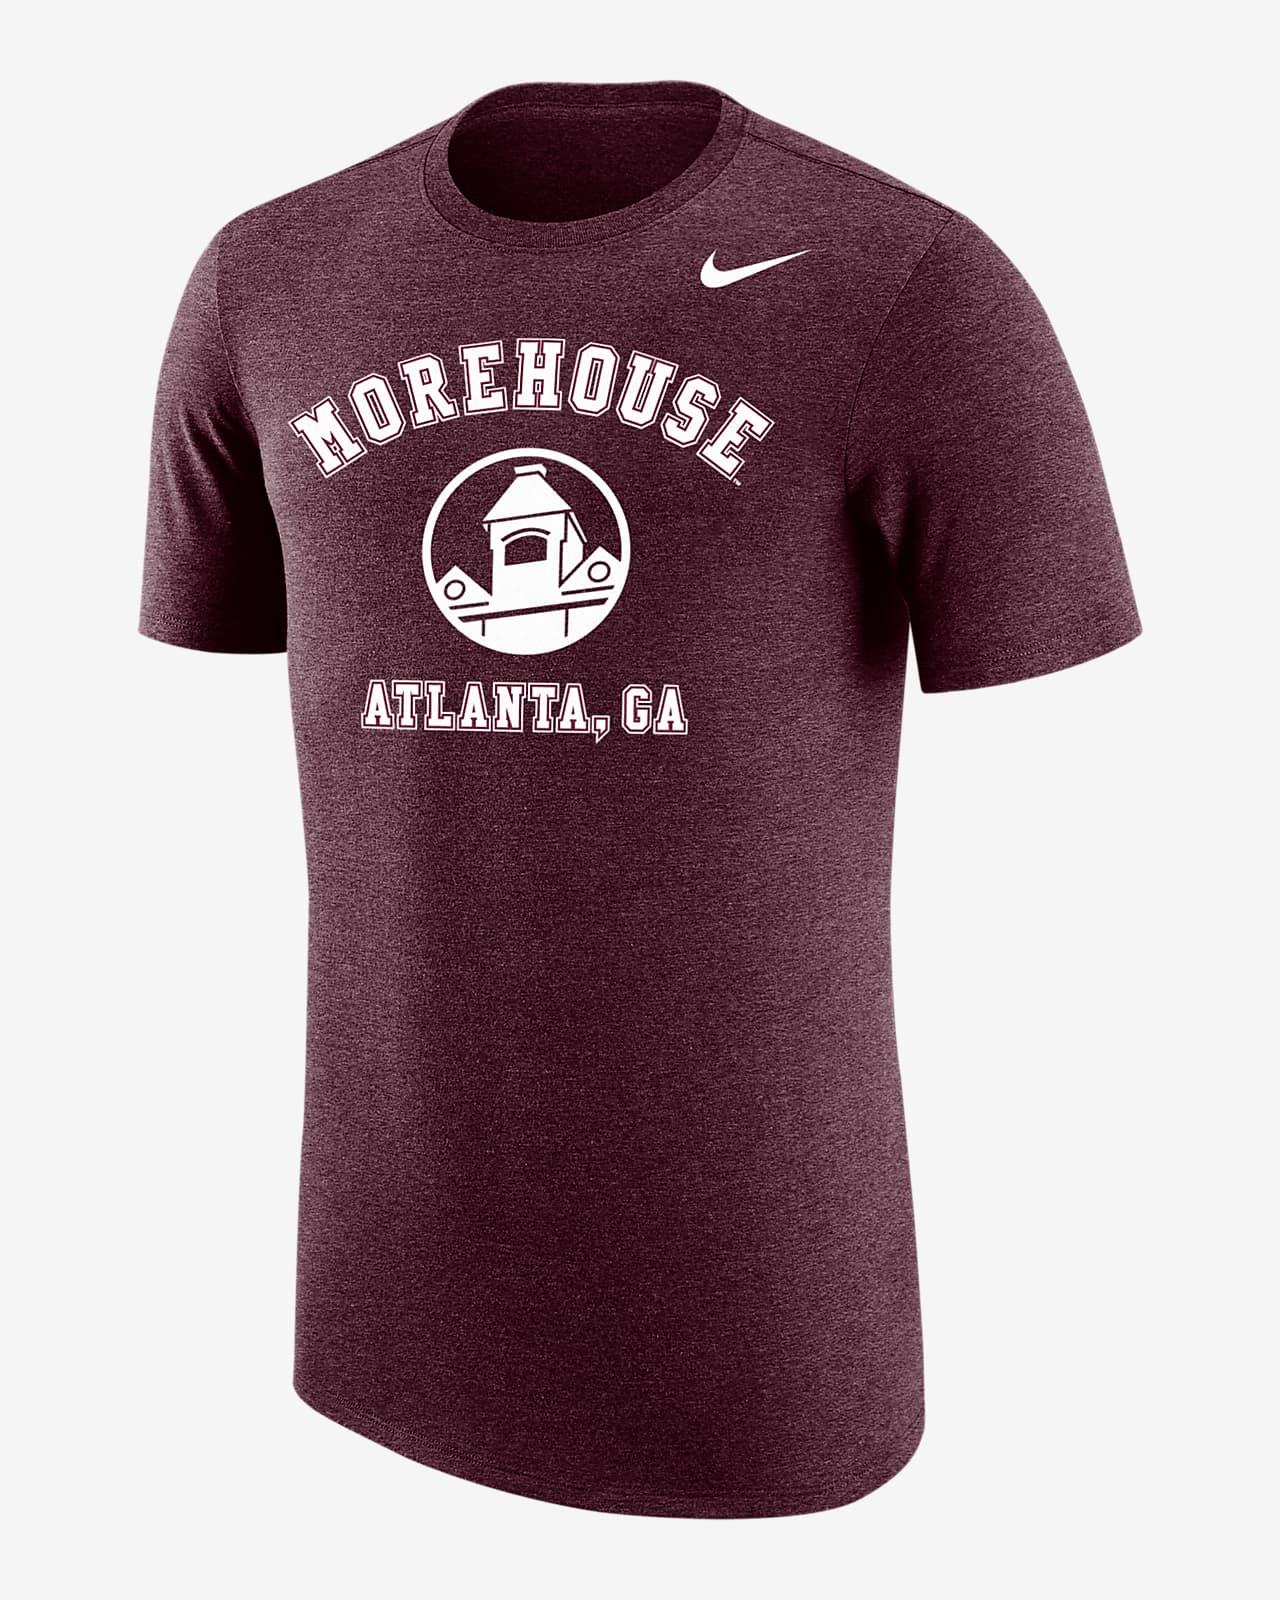 Morehouse Men's Nike College T-Shirt